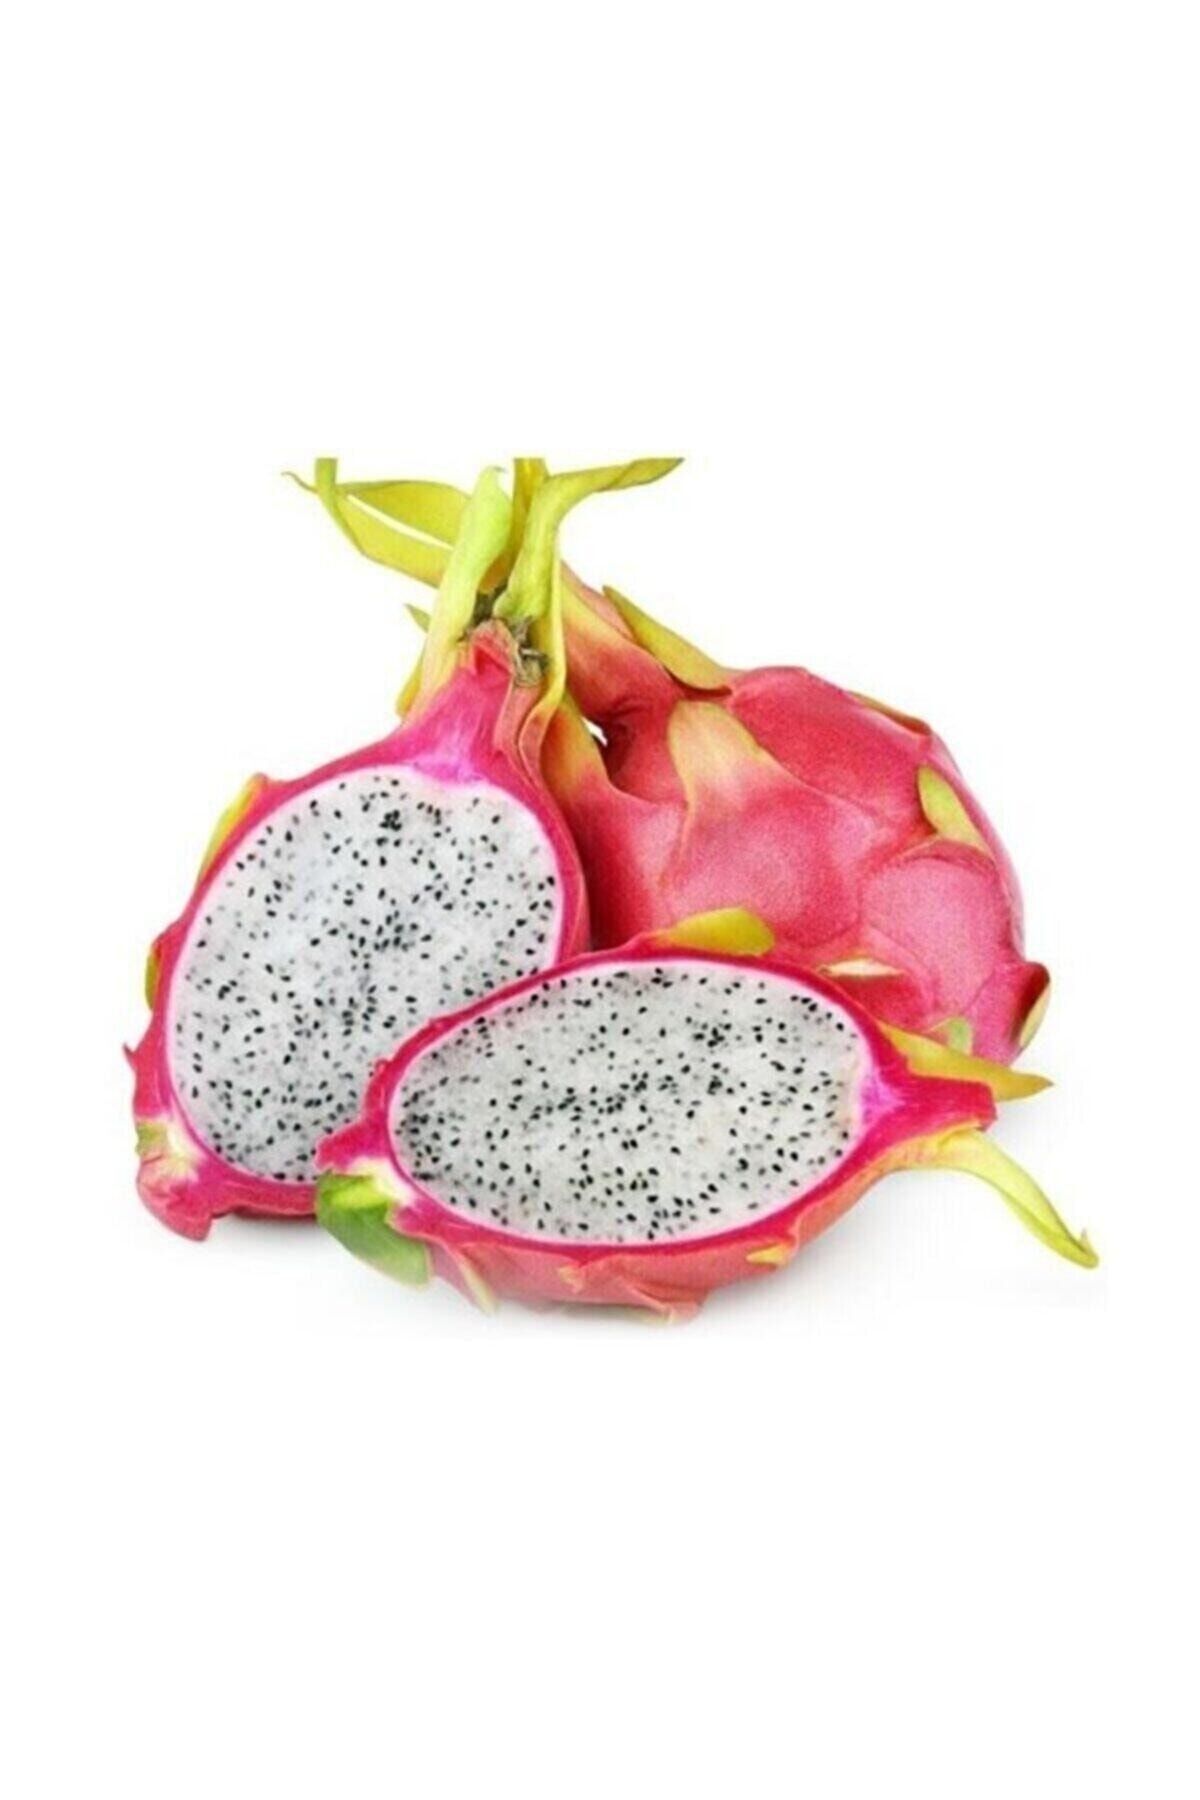 Genel Markalar Pitaya Ejder Meyvesi Tohumu 10 Adet Tohum Pithaya Dragon Fruit